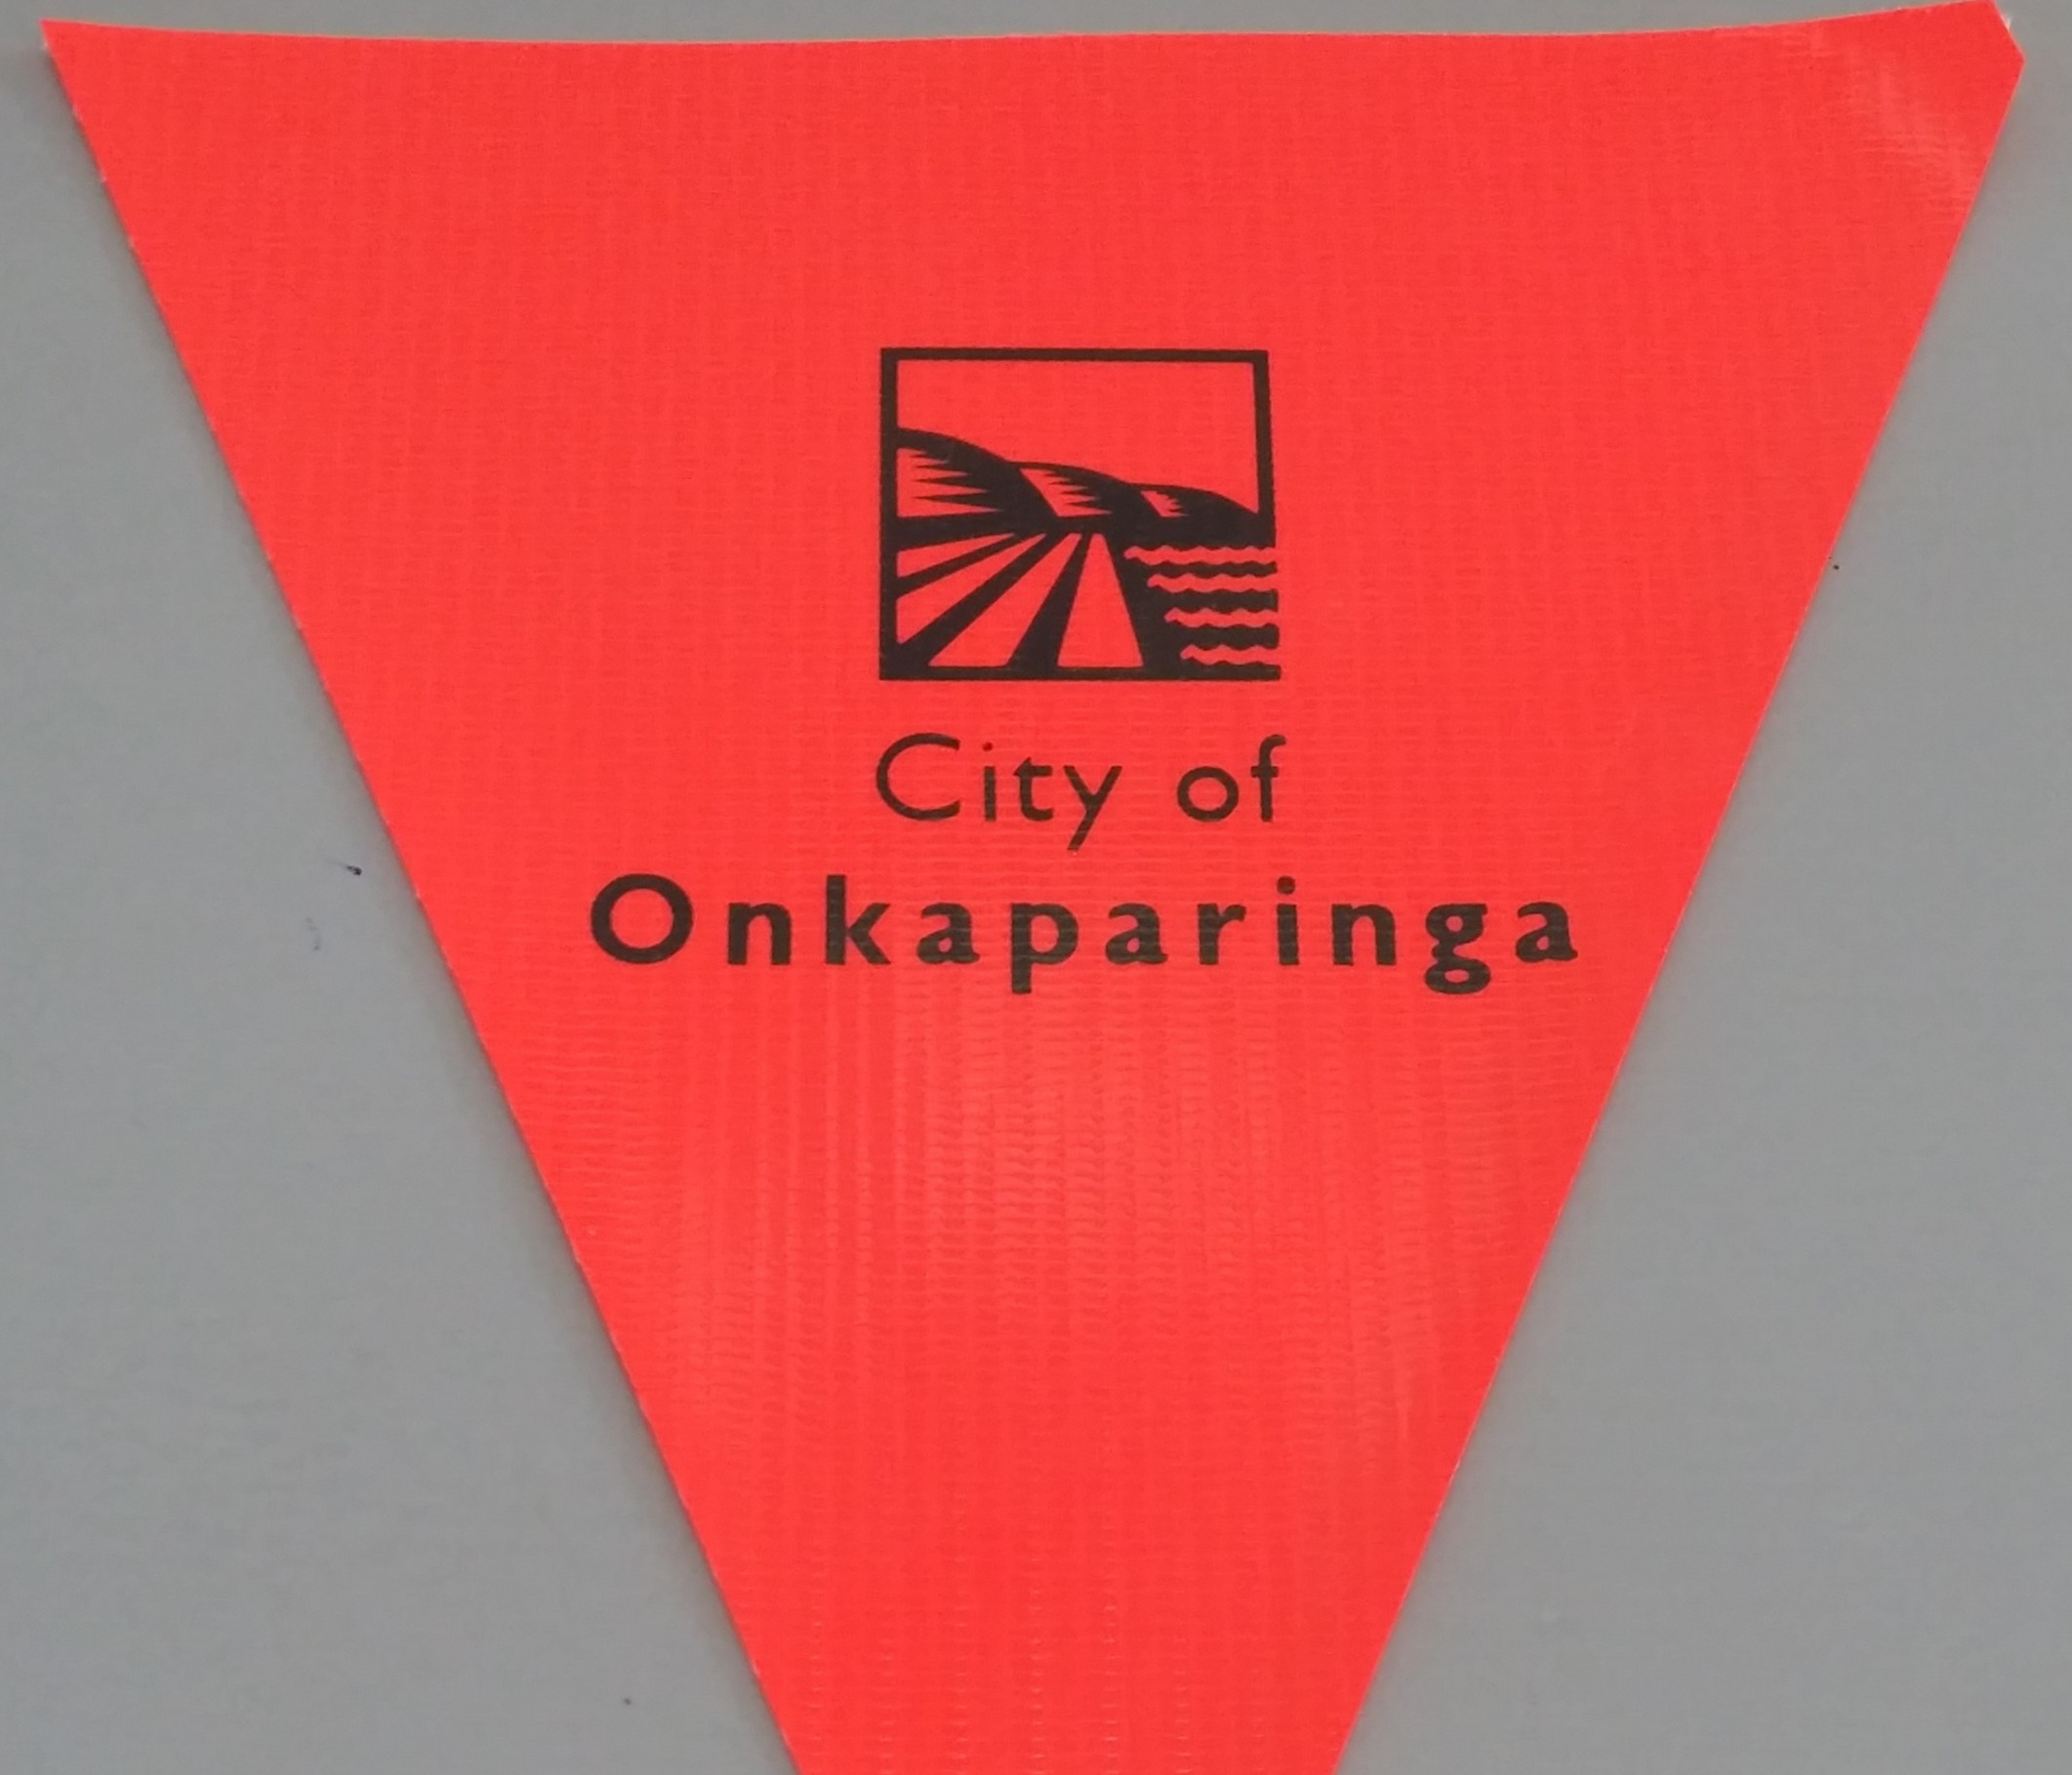 City of Onkaparinga (orange)